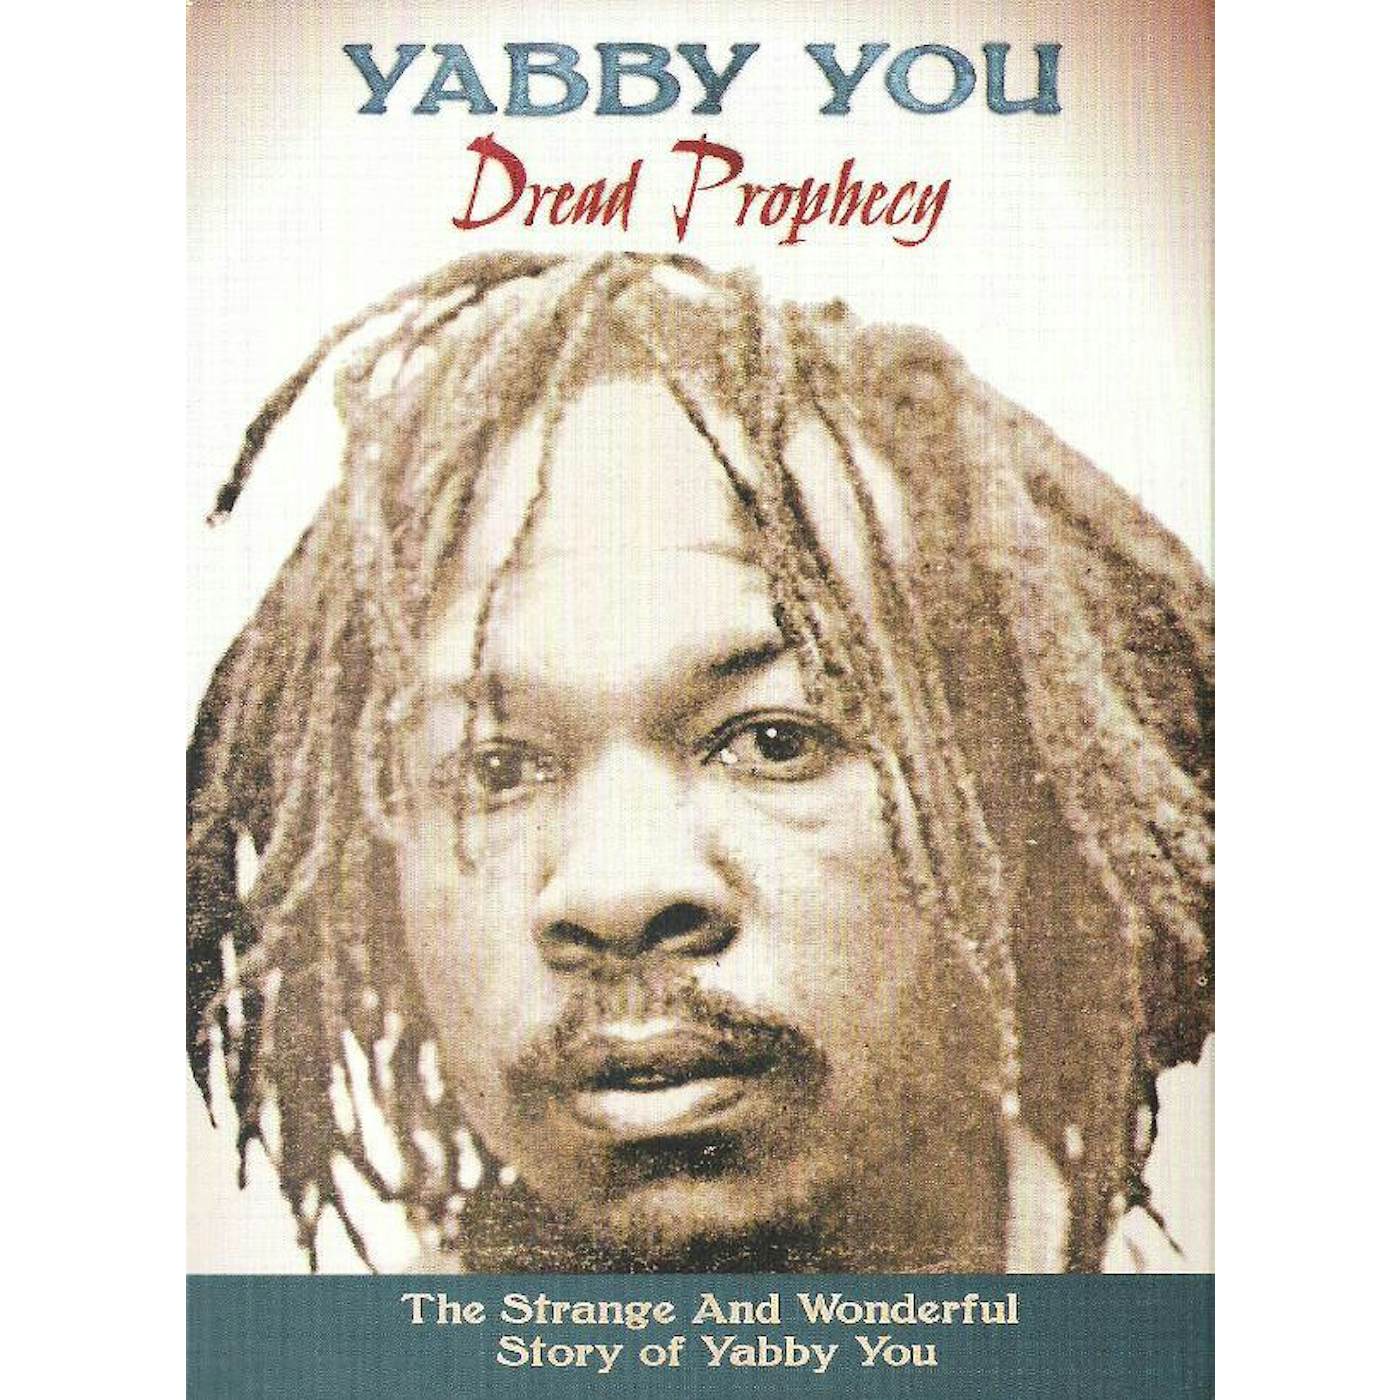 Yabby You DREAD PROPHECY CD